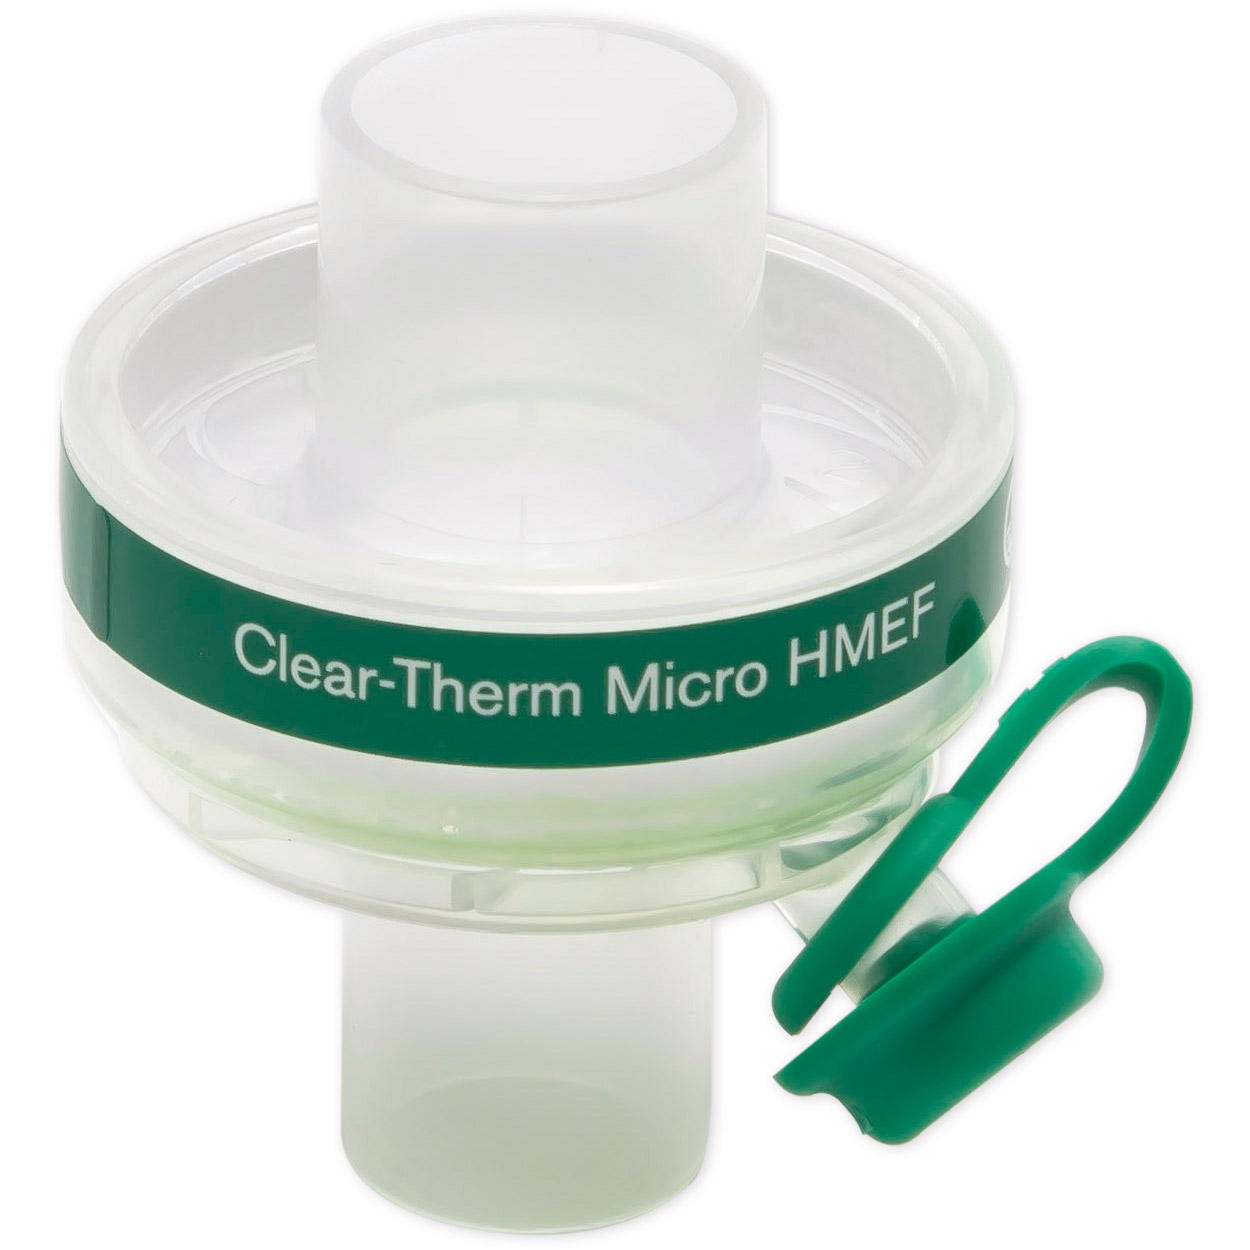 Bakterienfilter Clear Therm Micro HMEF für Babies mit Luer Port - Packung à 20 Stück